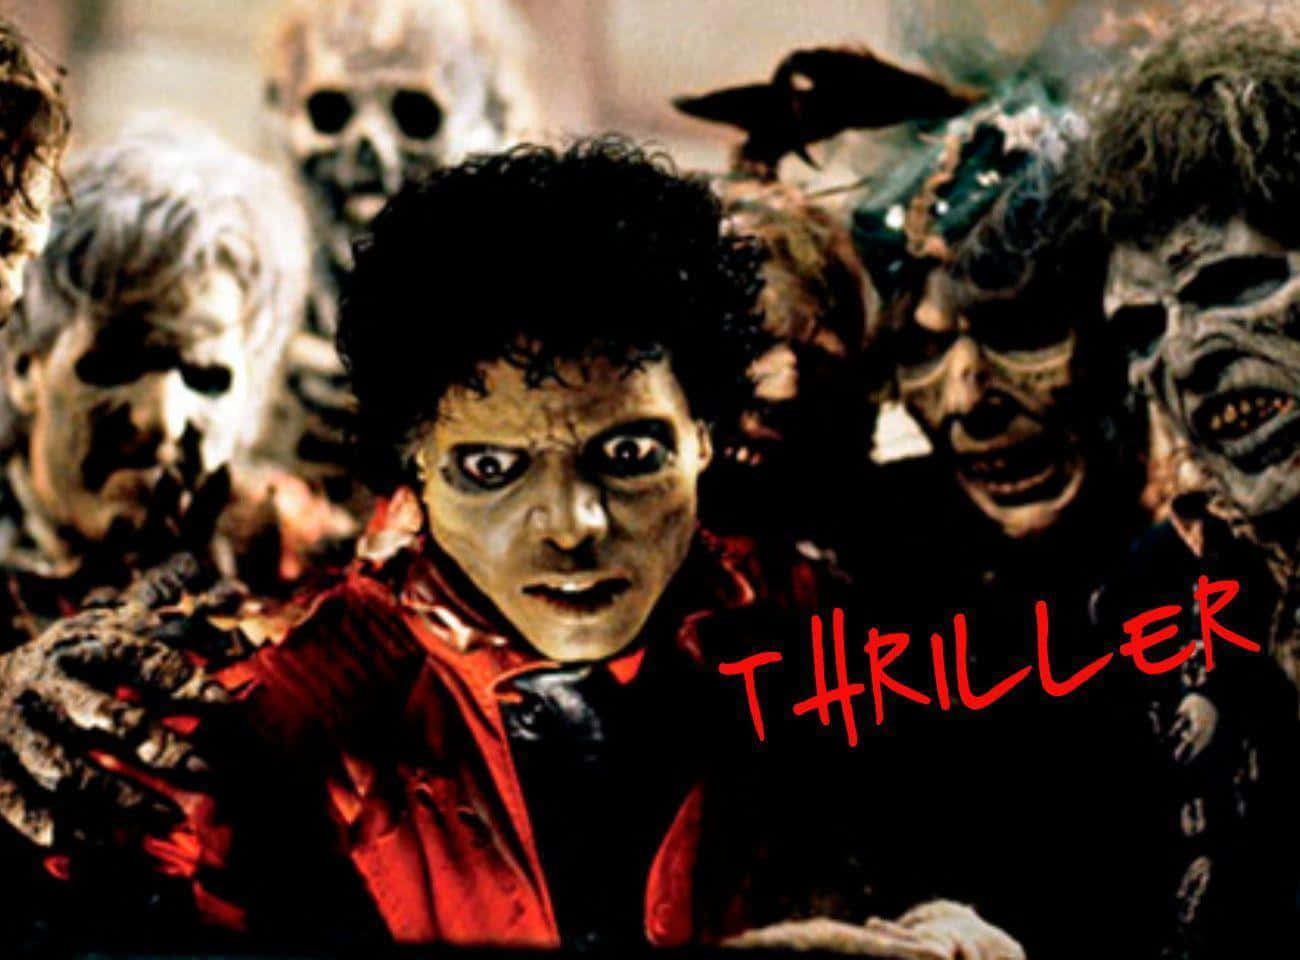 Michael Jackson Dances Thriller in Iconic Music Video Wallpaper